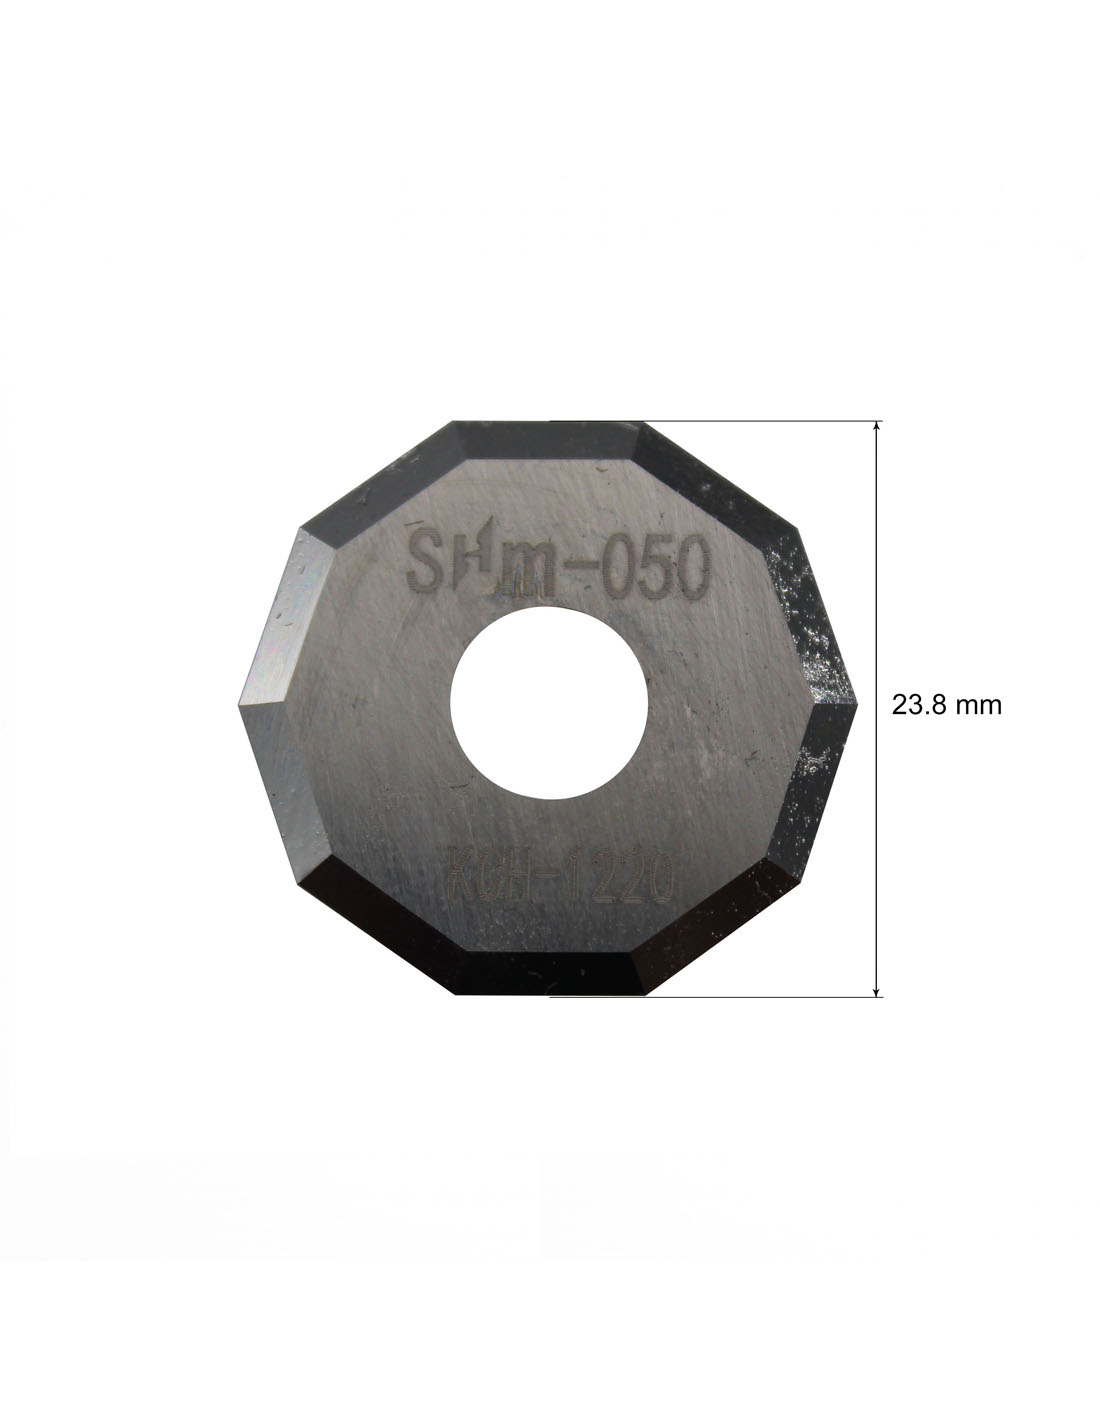 cuchilla-zund-z50-3910335-shm-050-compatible-para-maquina-zund-de-corte-automatizado.jpg